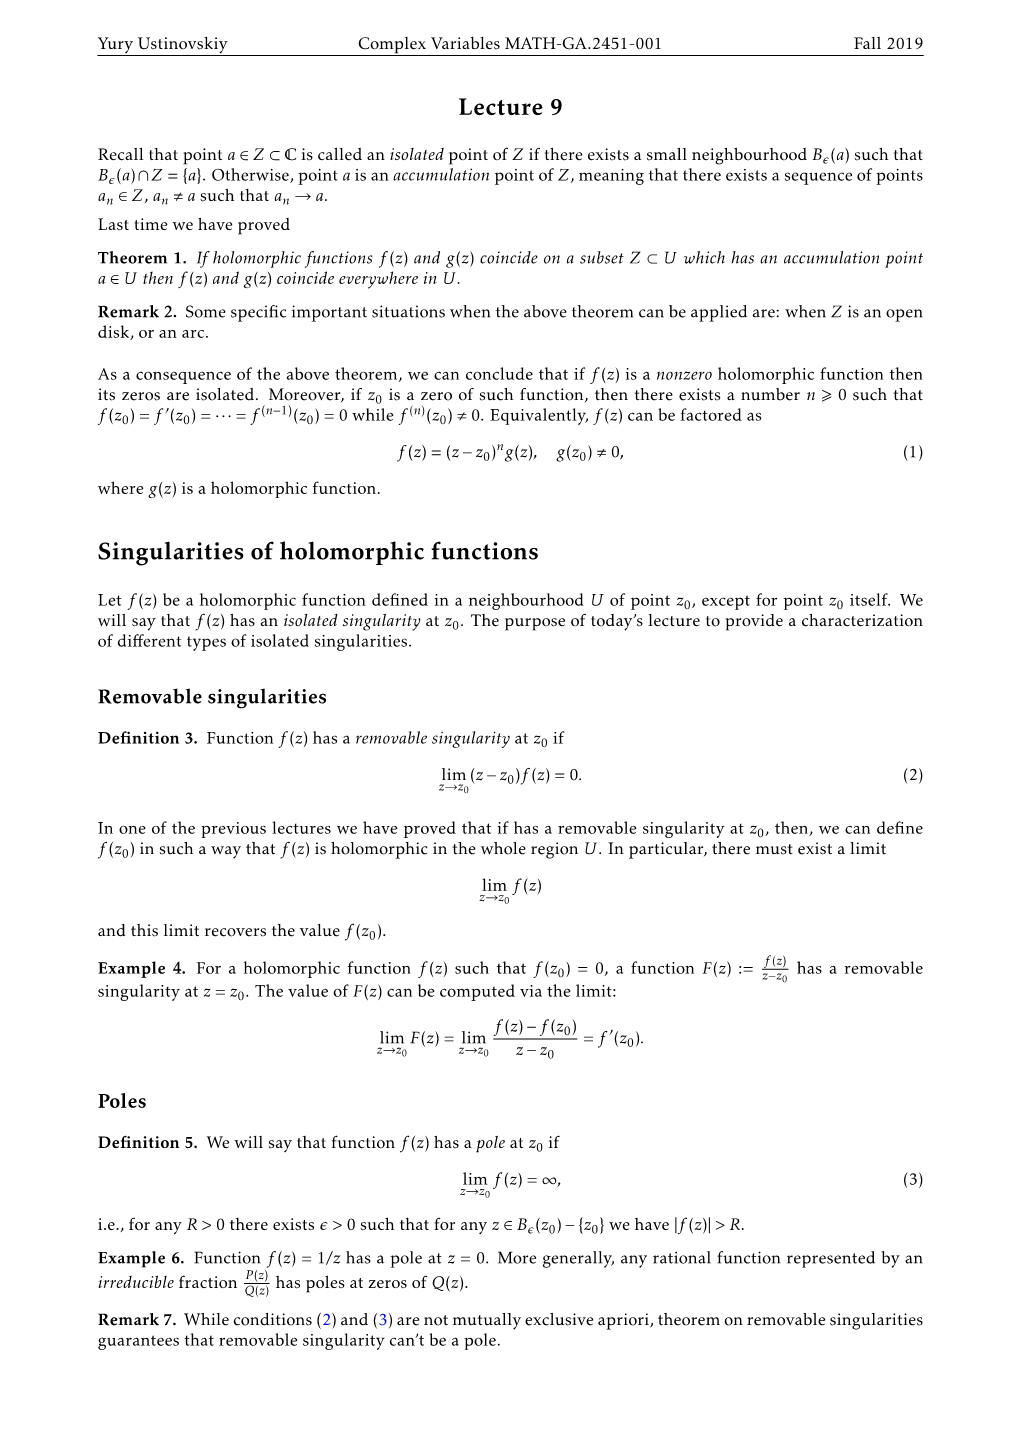 Lecture 9 Singularities of Holomorphic Functions